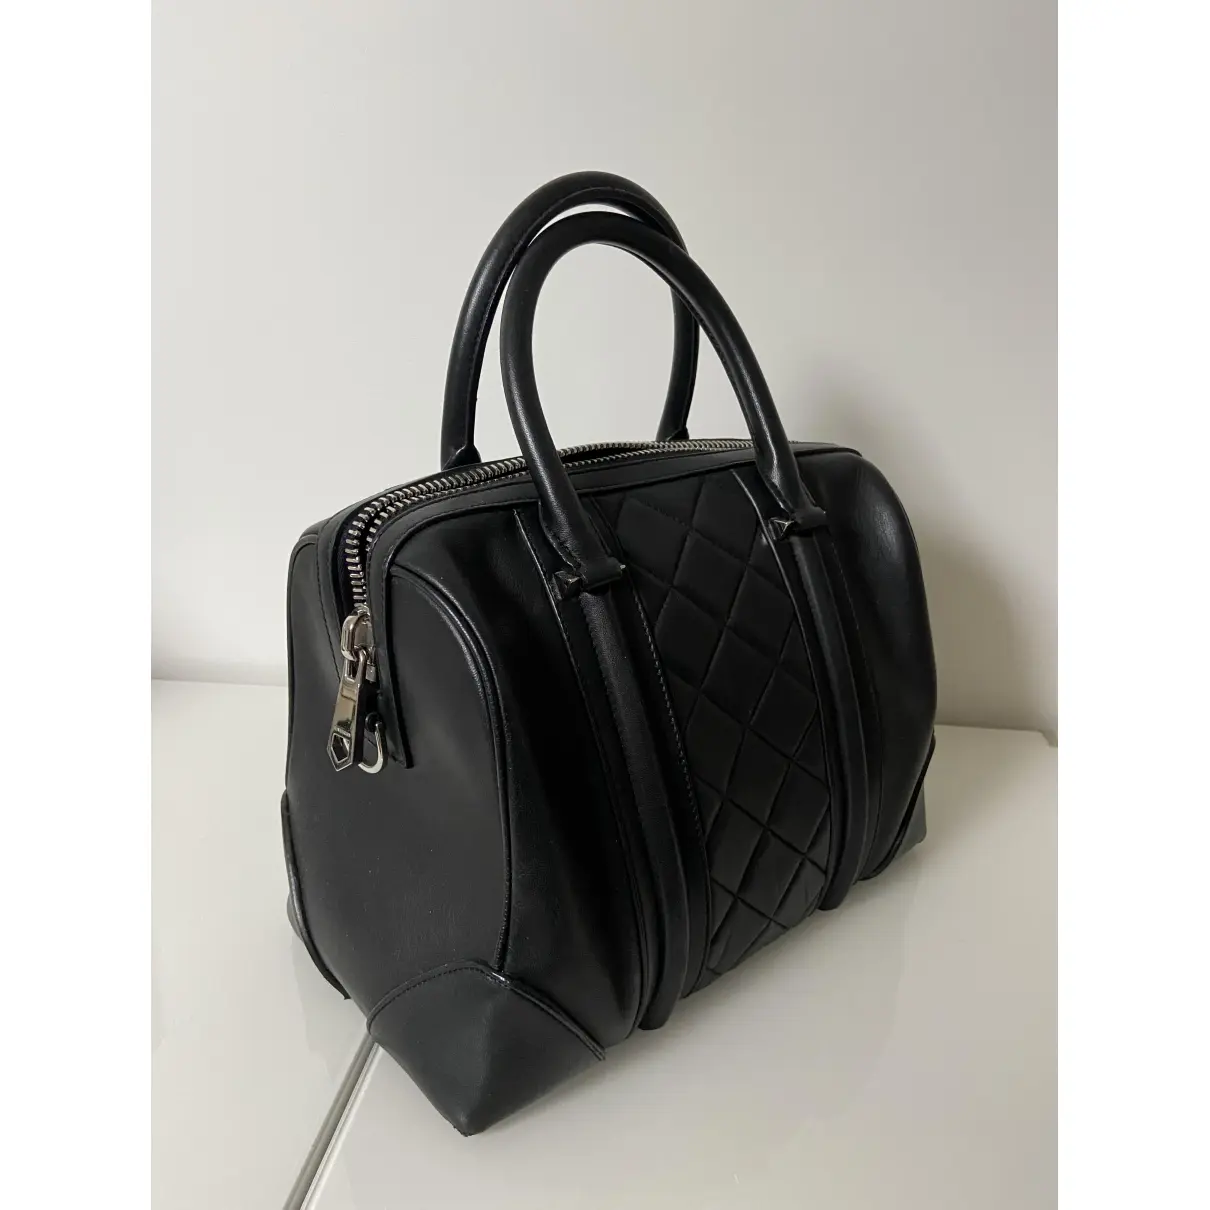 Buy Givenchy Lucrezia leather handbag online